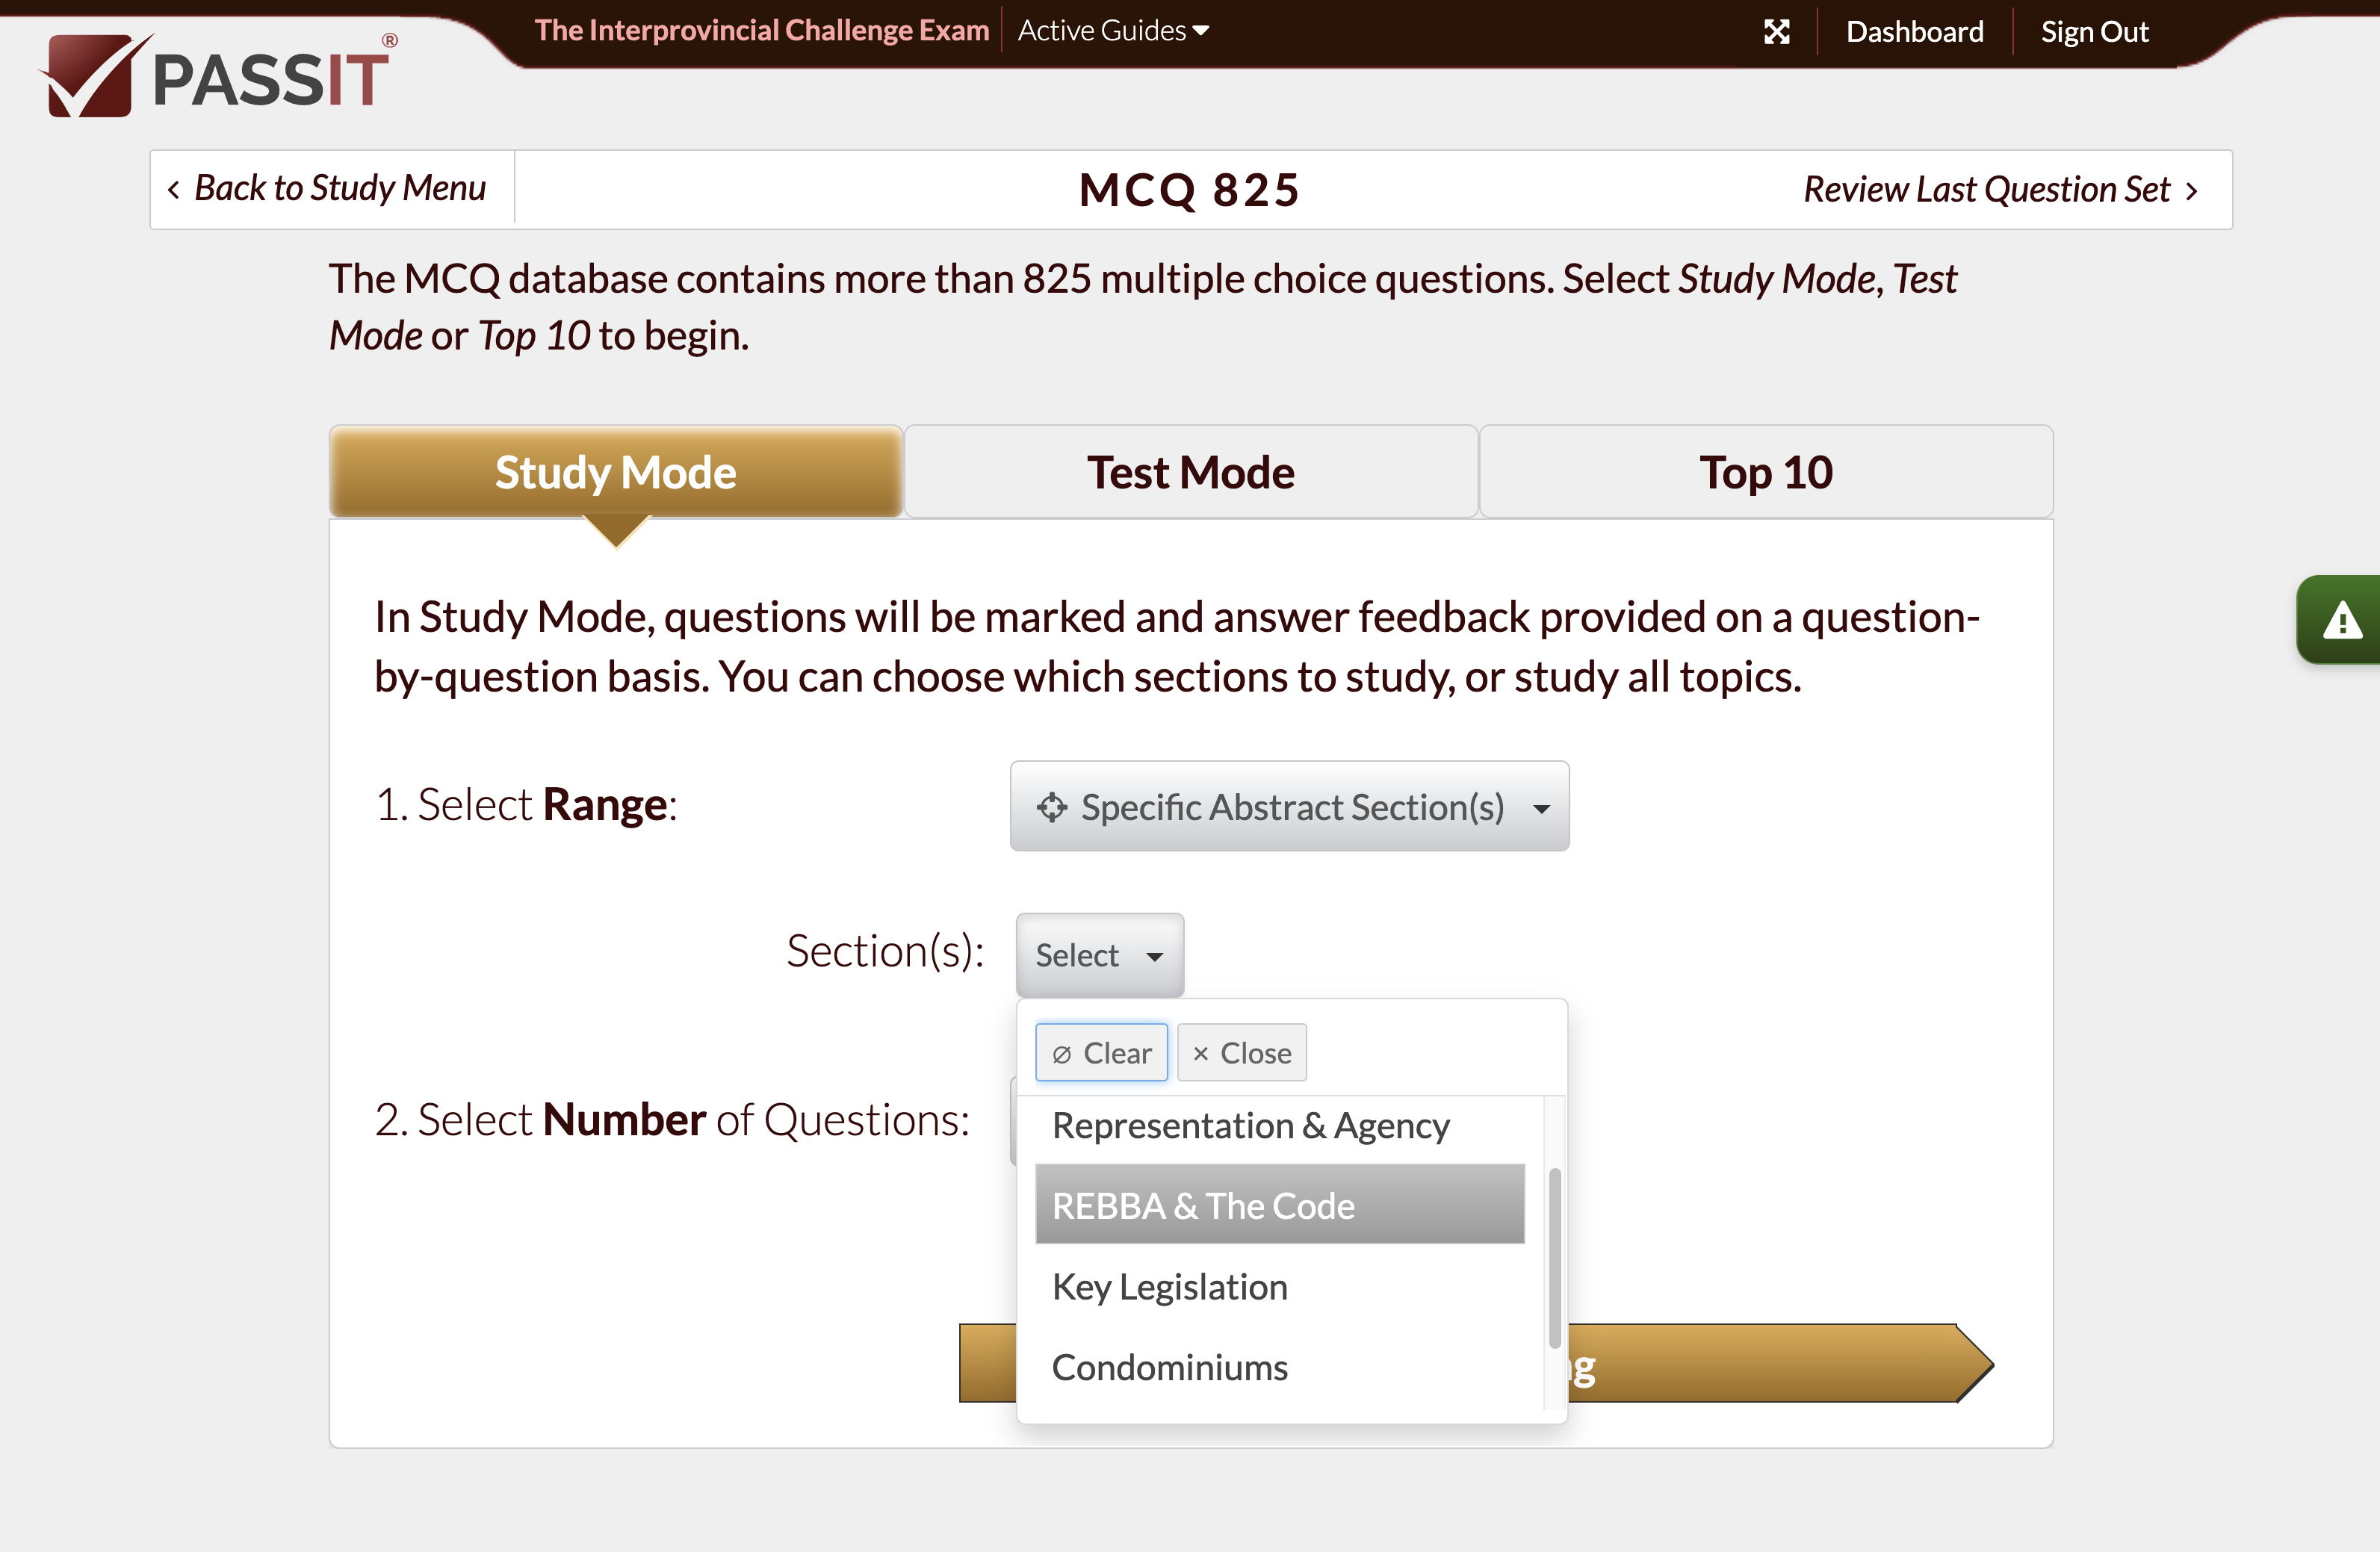 Snapshot of MCQ Menu Study Options